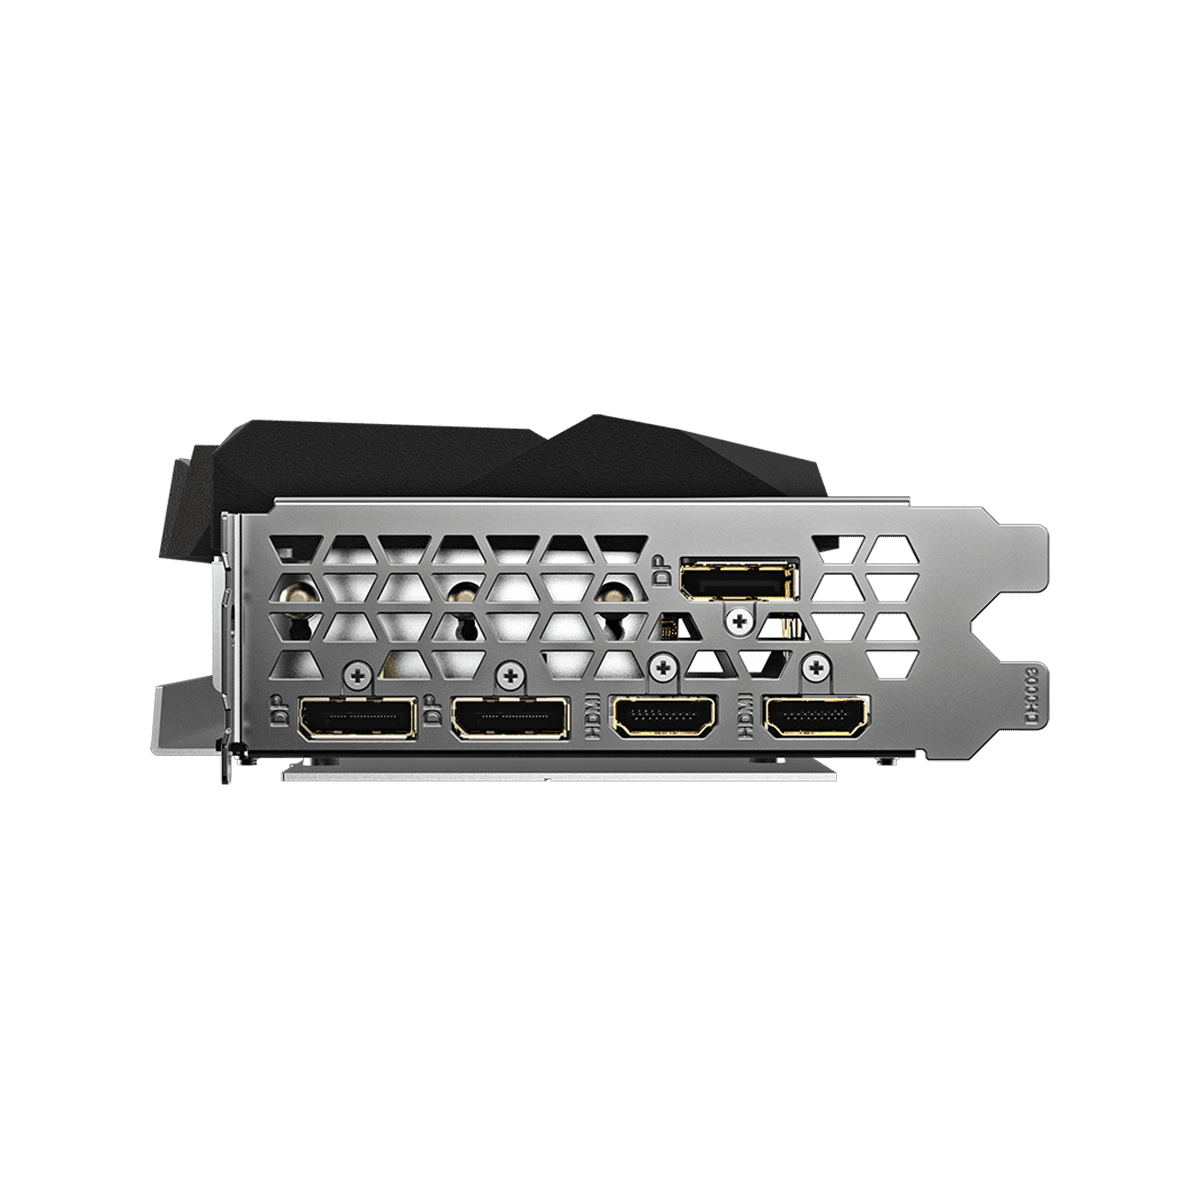 GIGABYTE NVIDIA GEFORCE RTX 3090 搭載 グラフィックボード | CFD販売株式会社 CFD Sales INC.